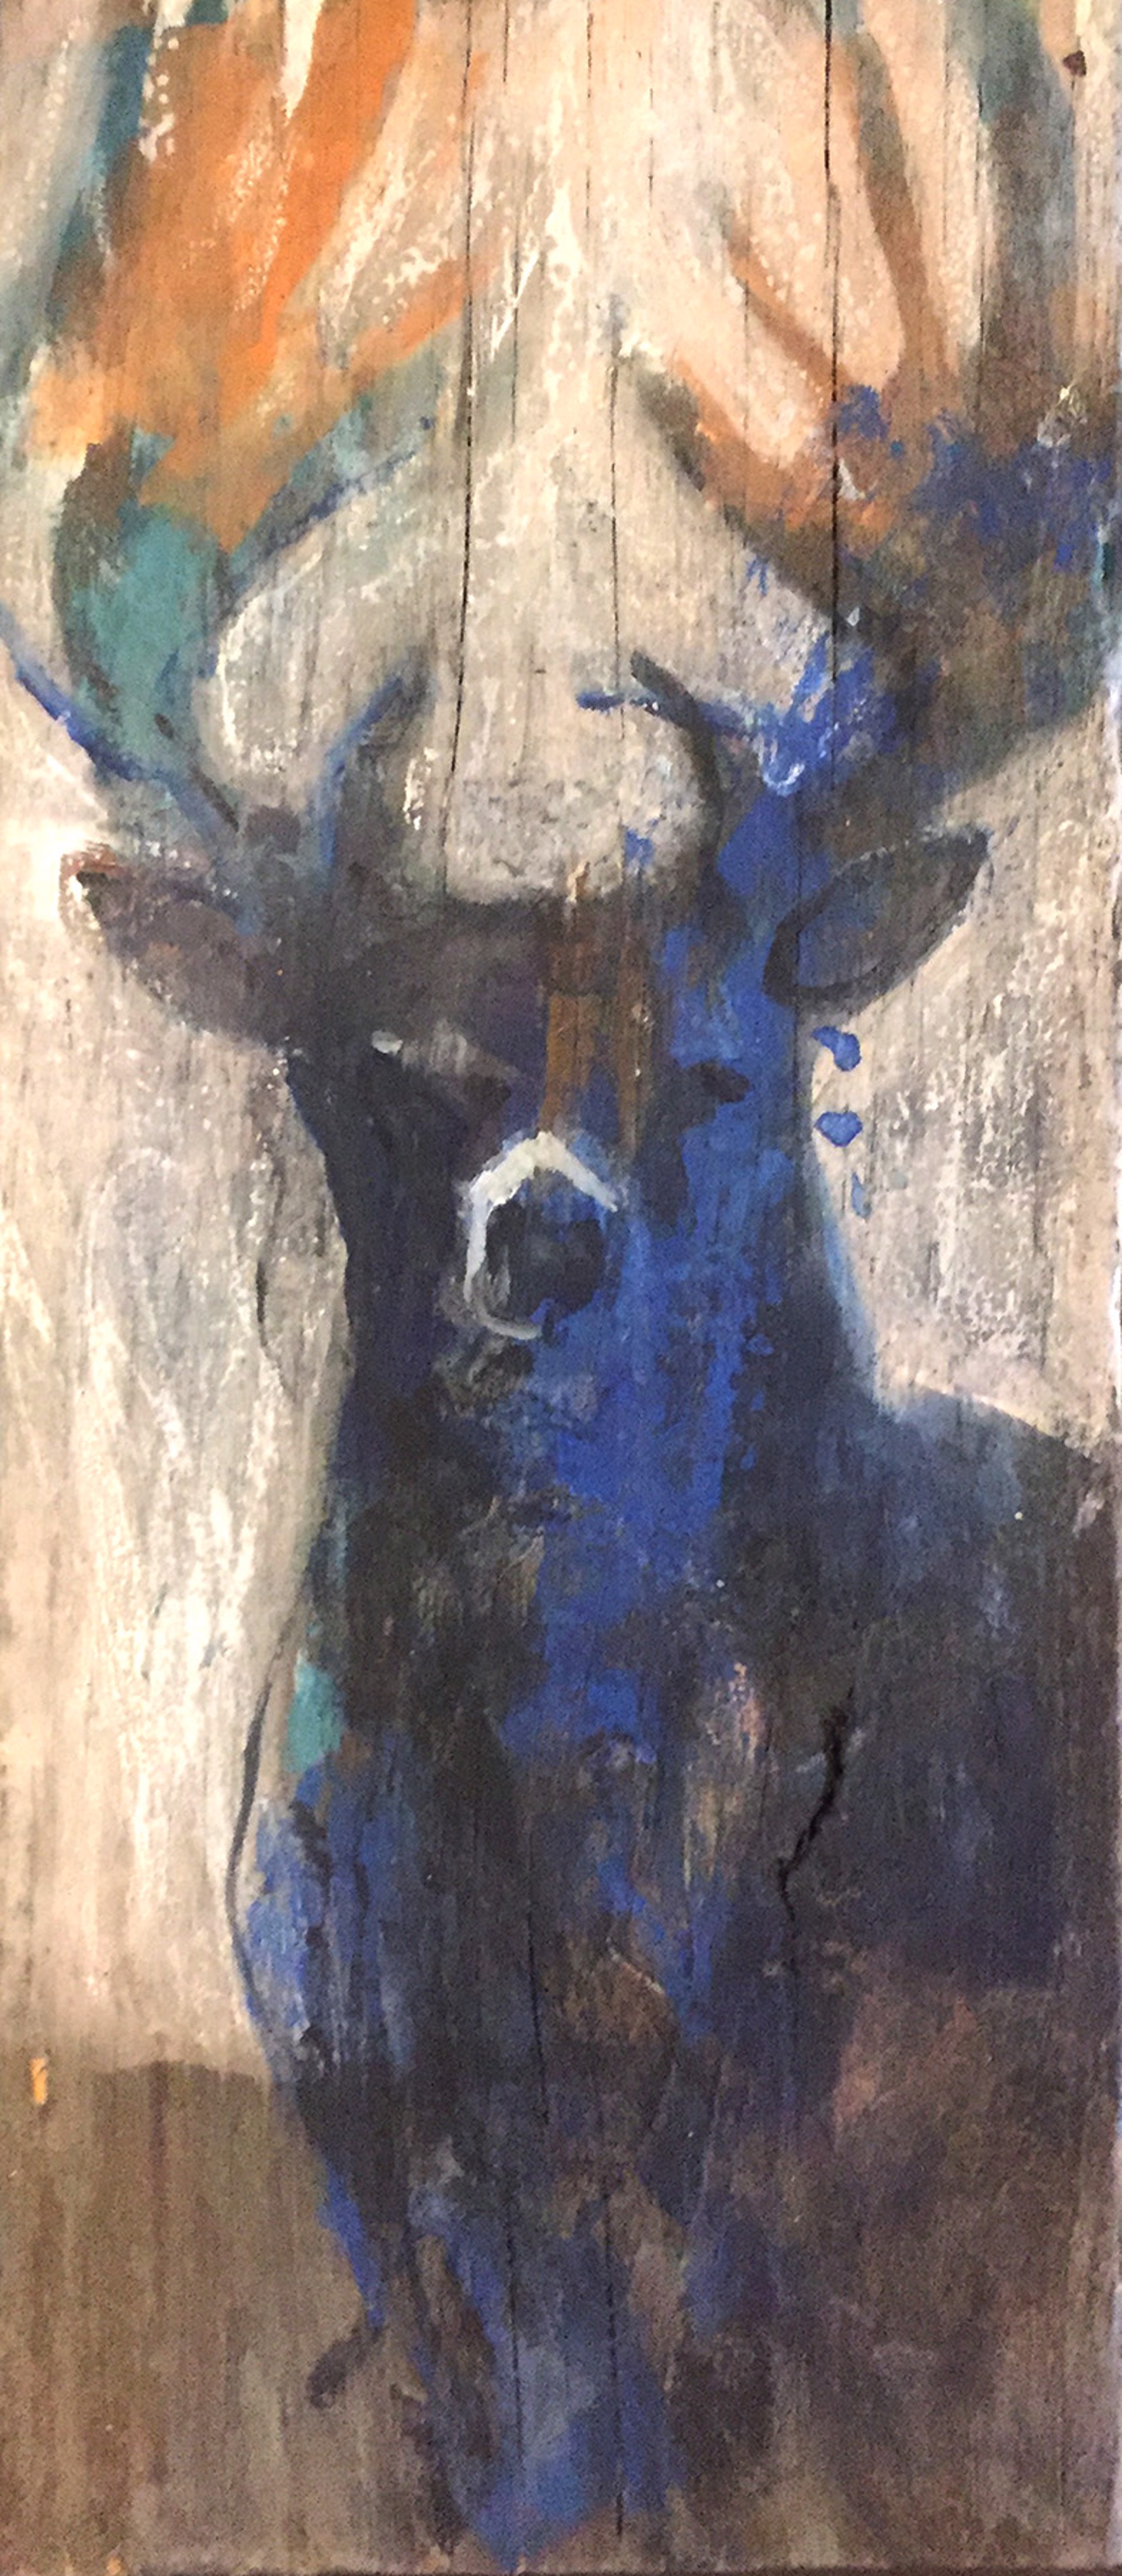 Deer III by Susan Easton Burns